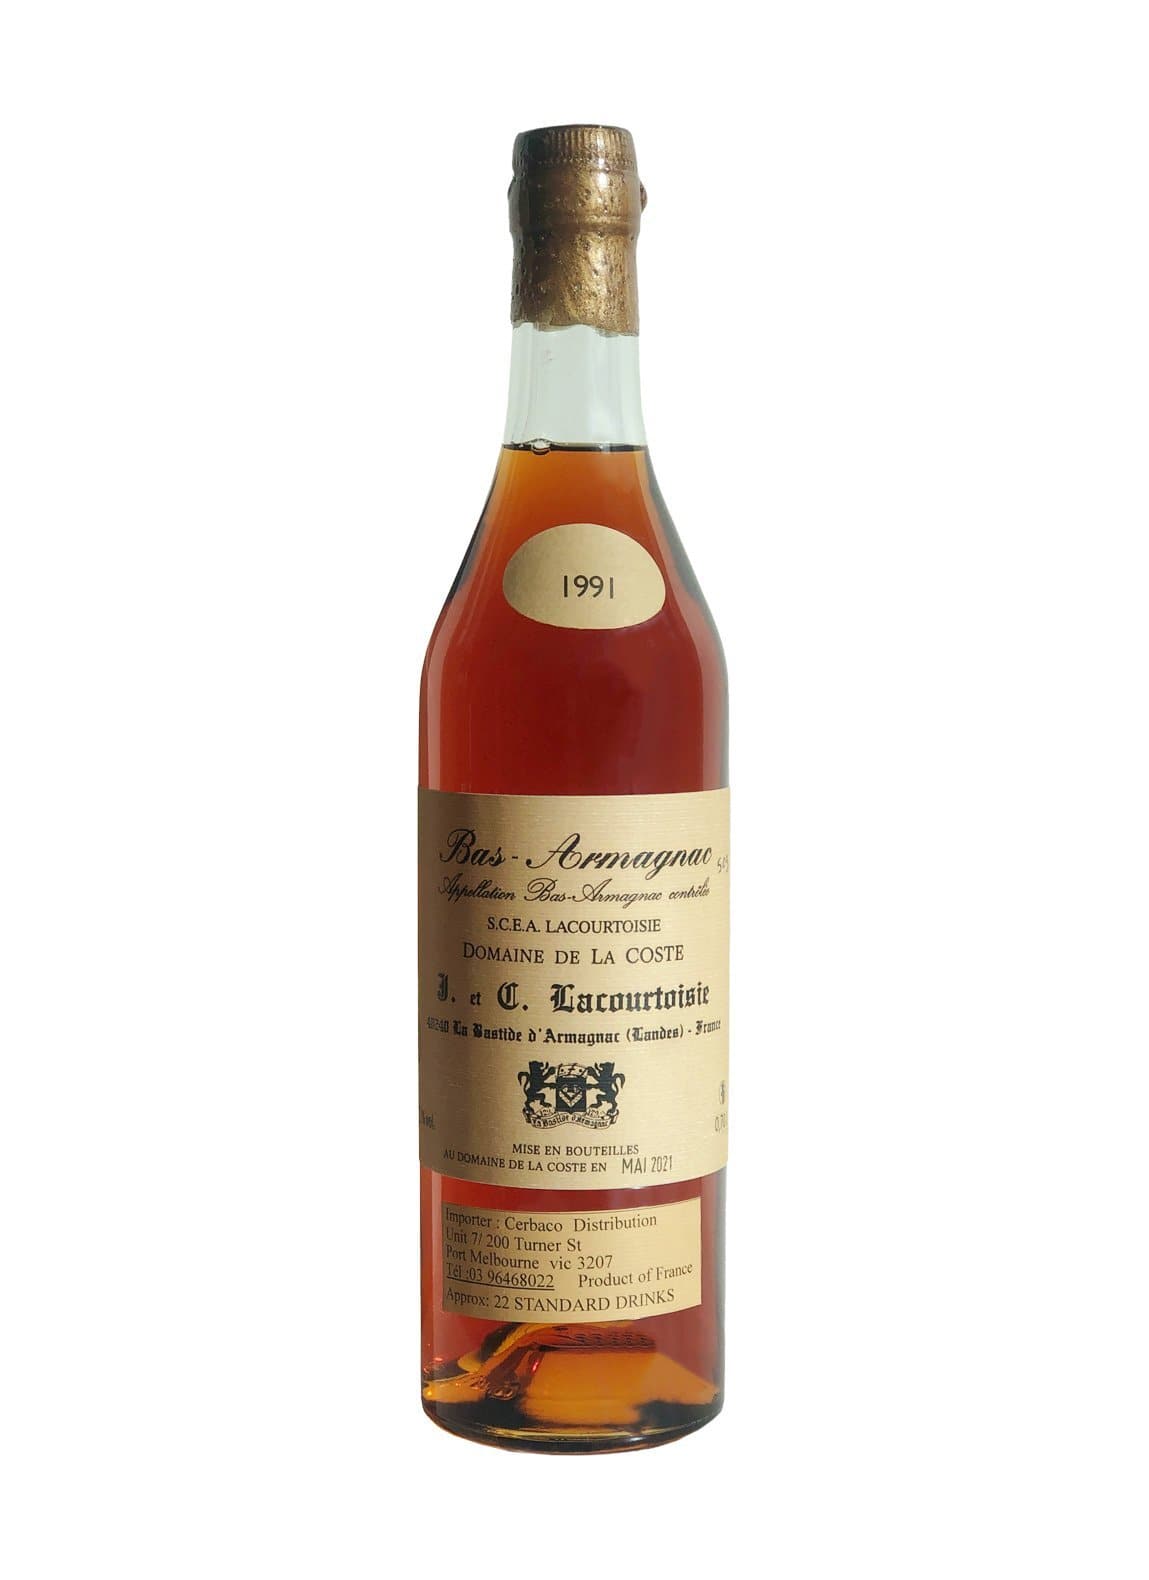 Domaine Lacourtoisie 1991 Grand Bas Armagnac 40% 700ml | Brandy | Shop online at Spirits of France